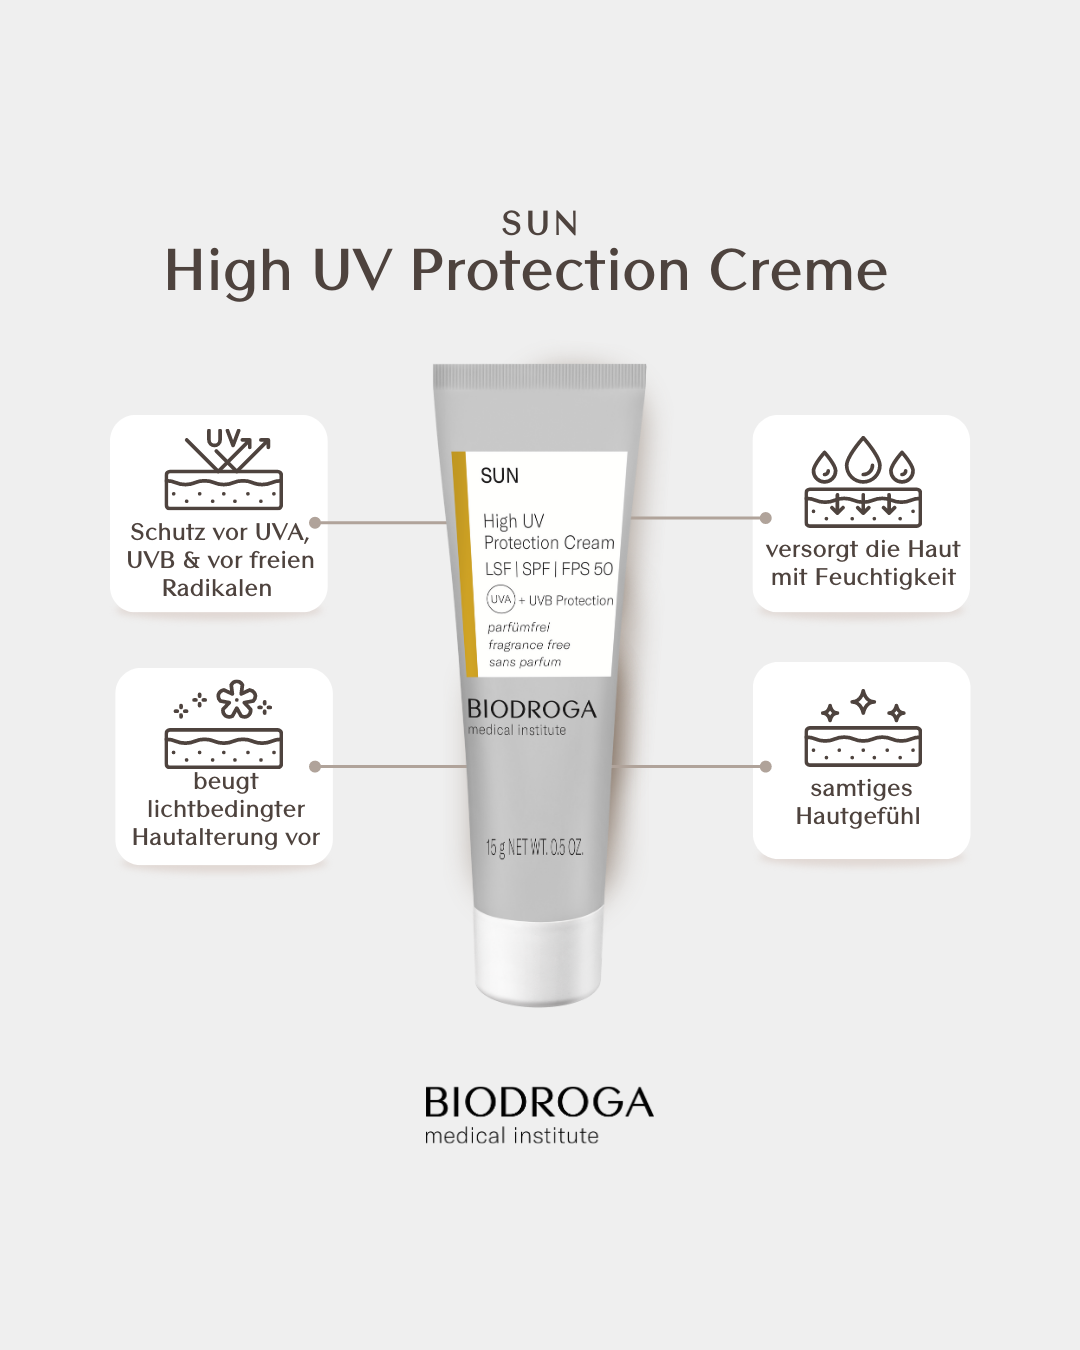 SUN High UV Protection Cream LSF 50